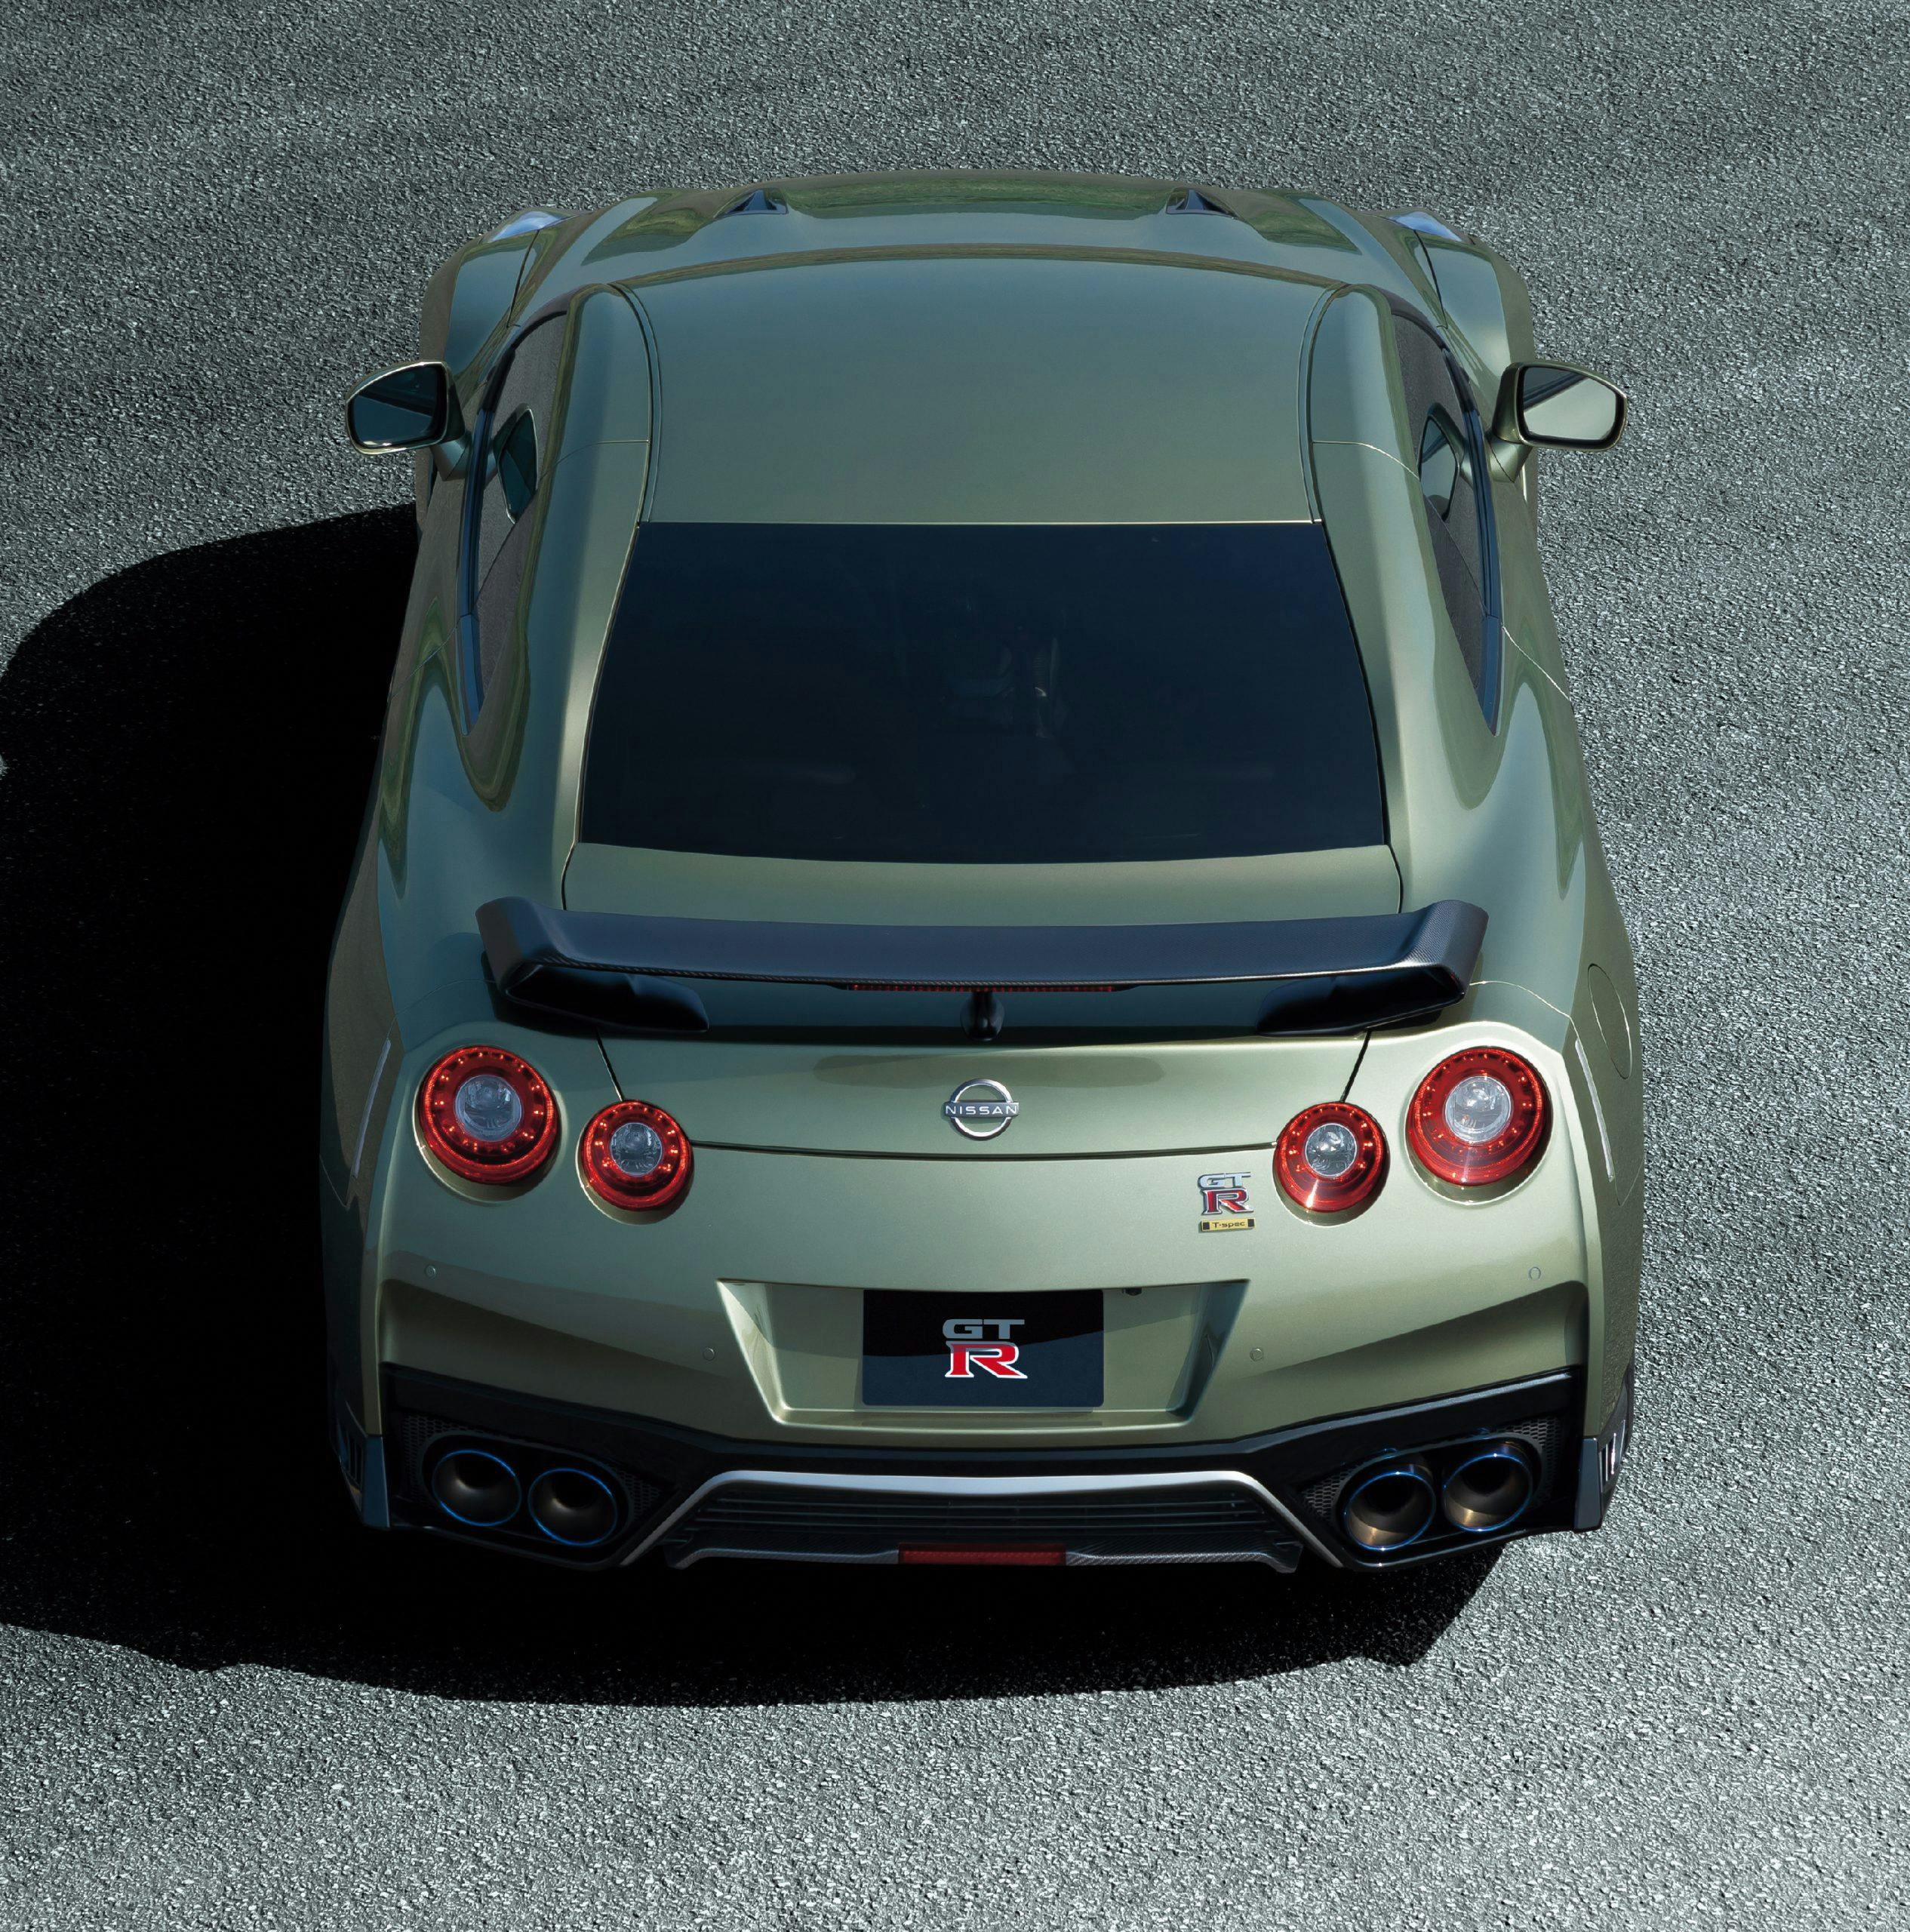 2022 Nissan GT-R rear